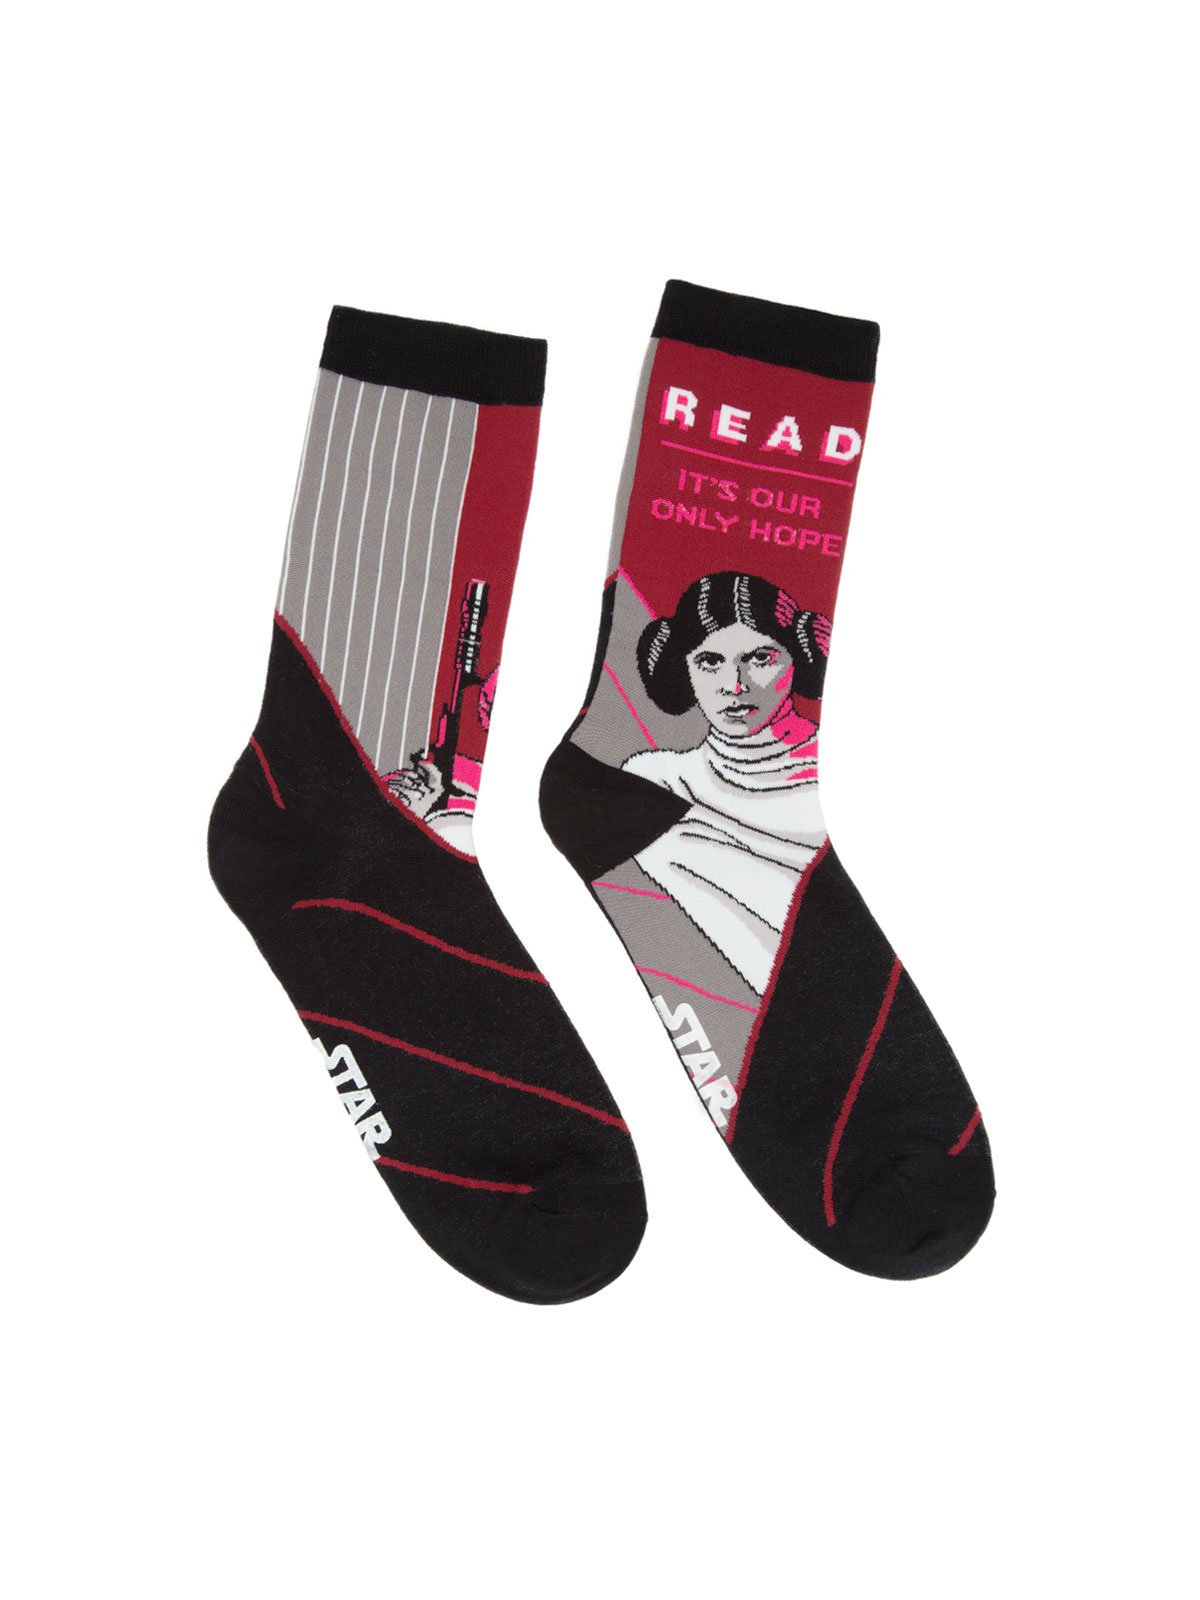 Princess Leia READ socks: cool gifts under $15